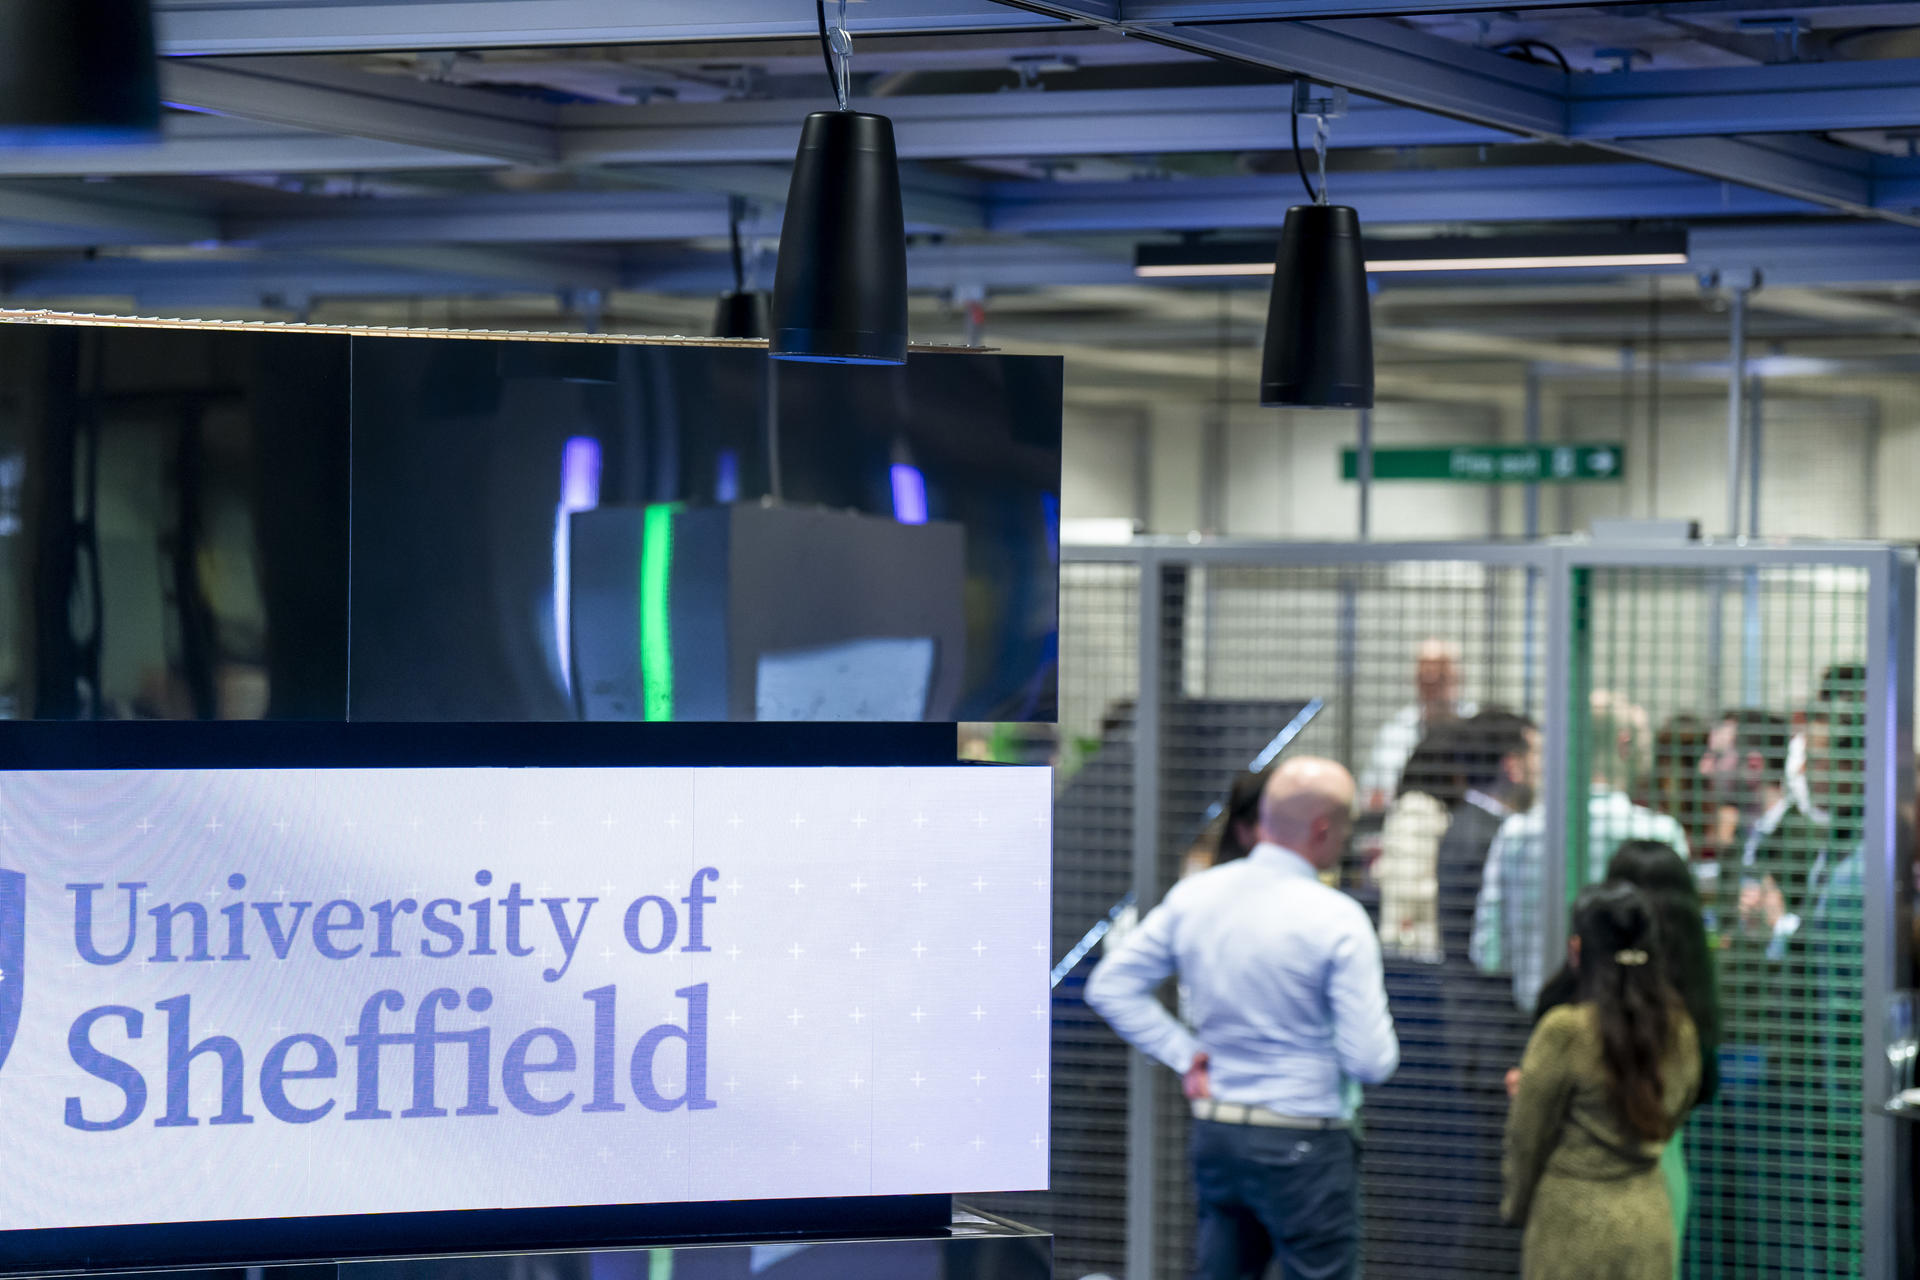 University of Sheffield event